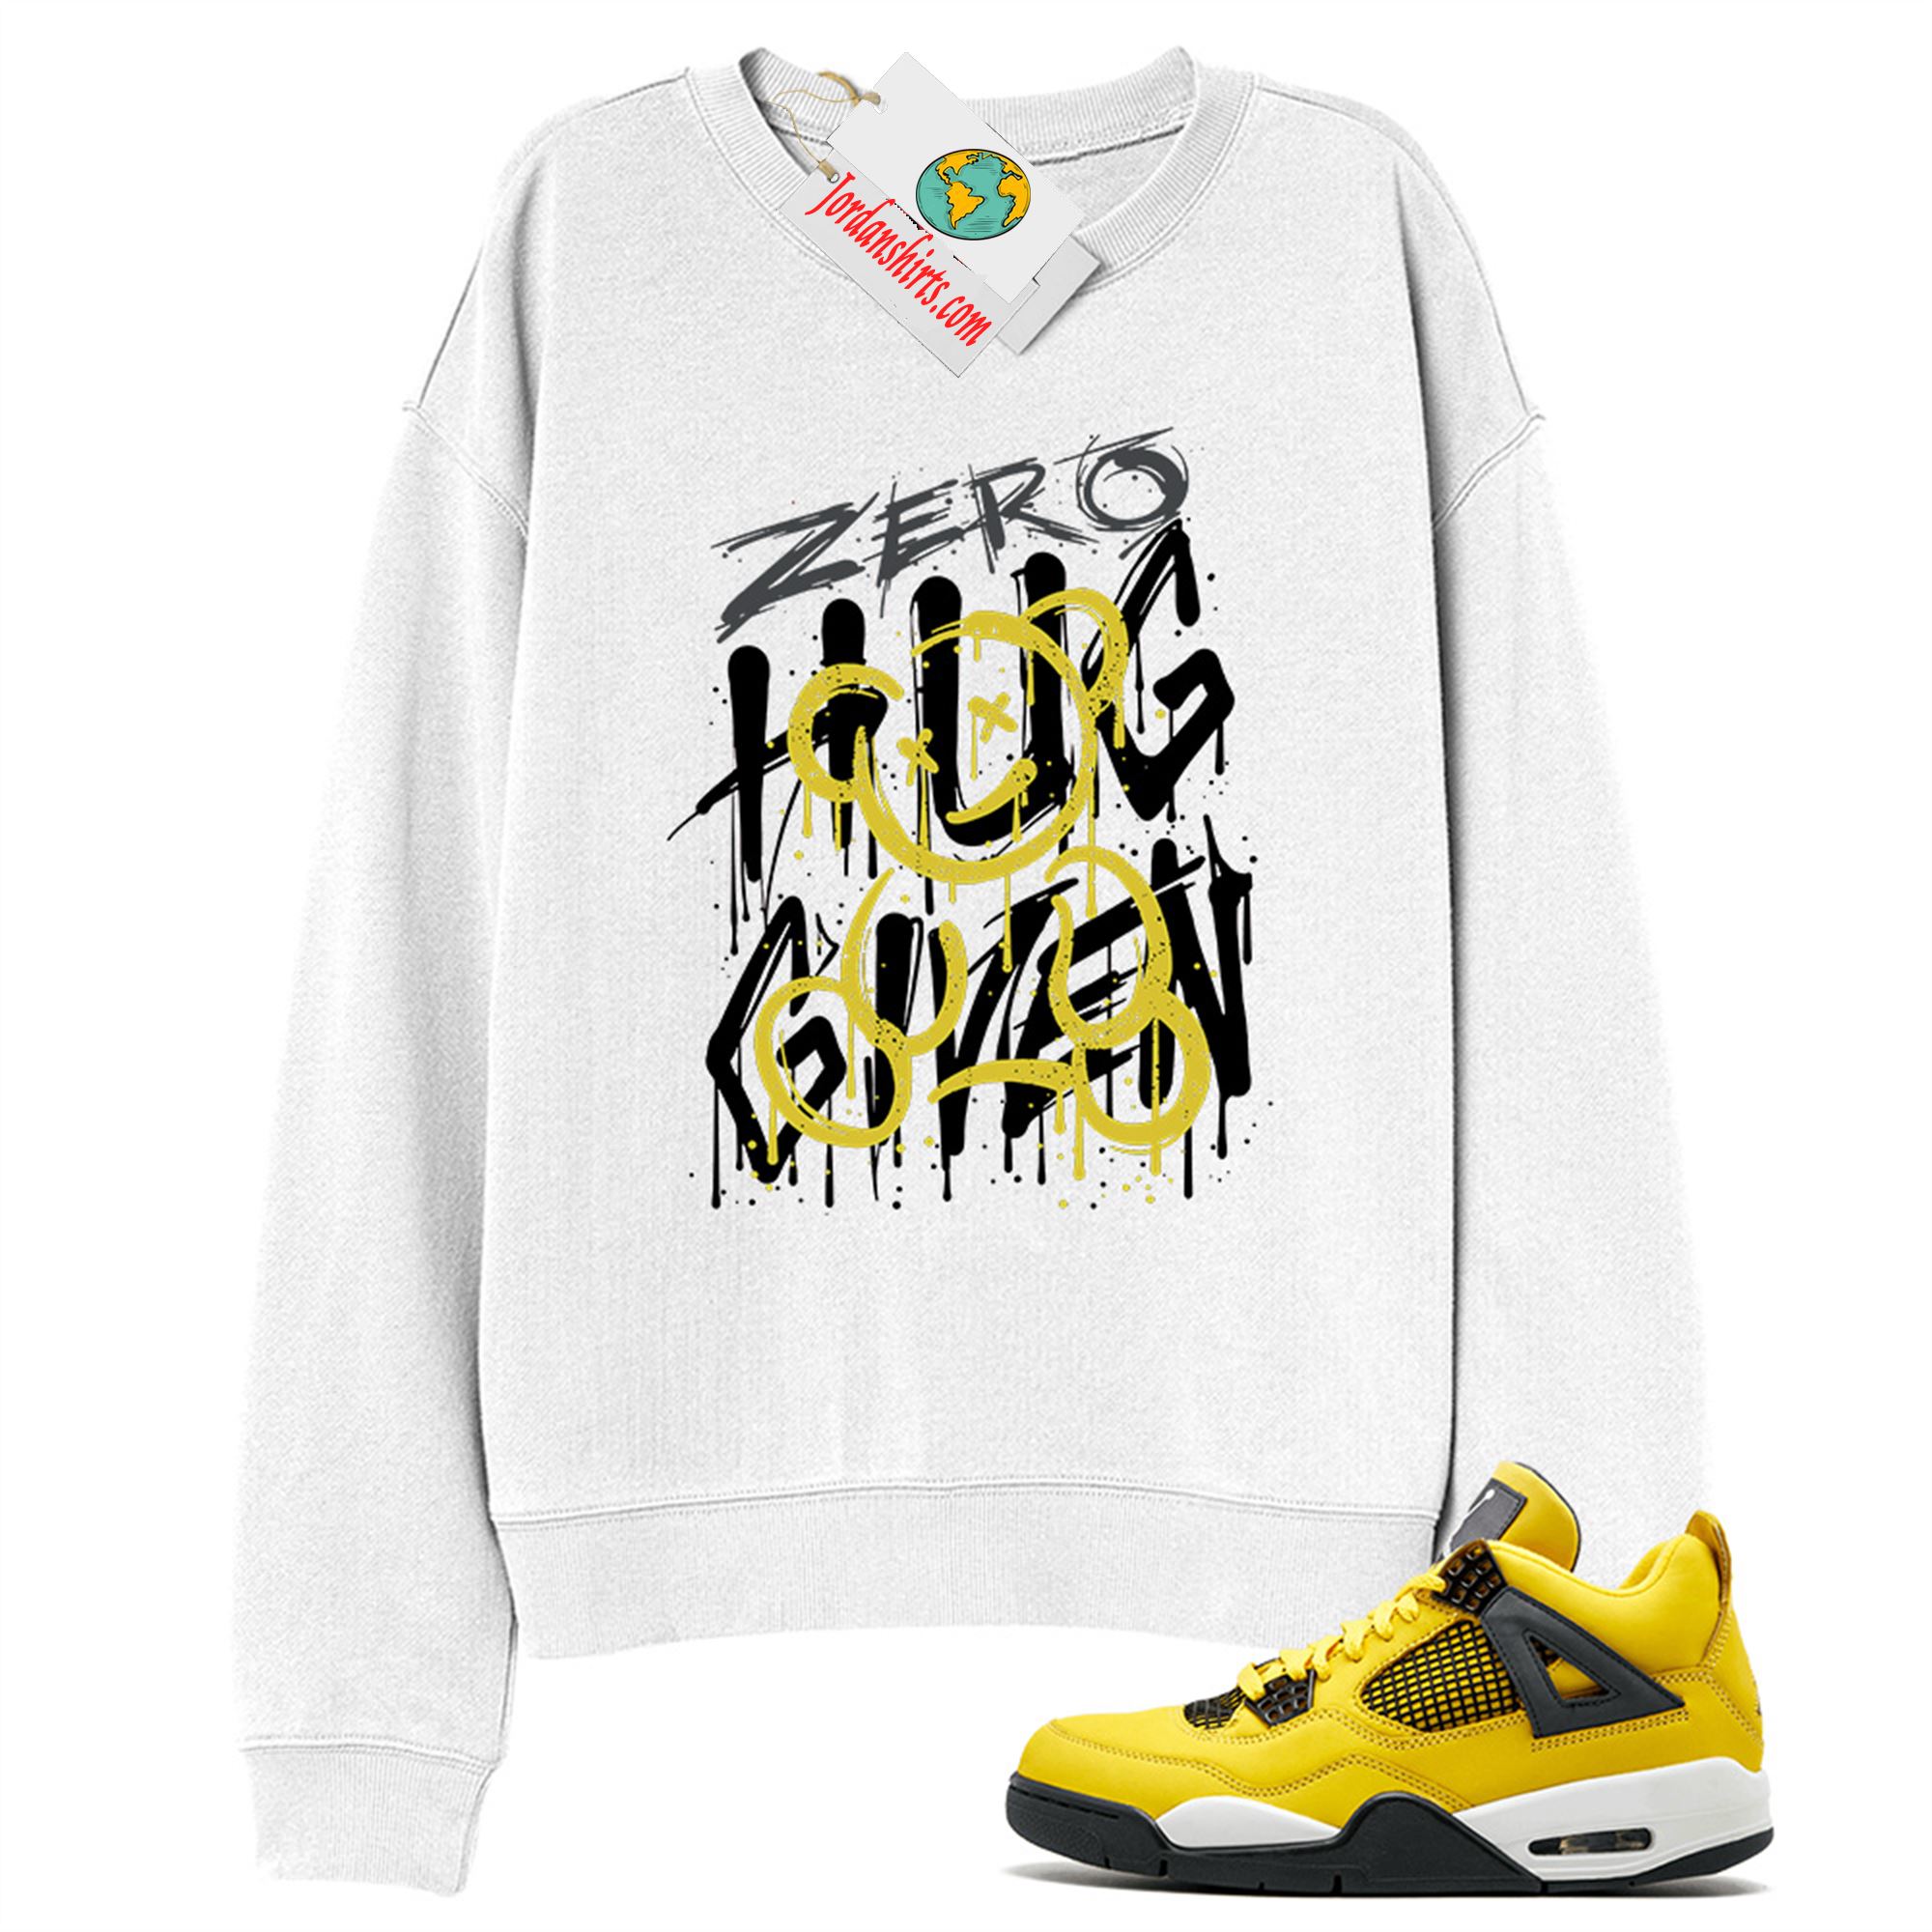 Jordan 4 Sweatshirt, Zero Hug Given White Sweatshirt Air Jordan 4 Tour Yellowlightning 4s Size Up To 5xl